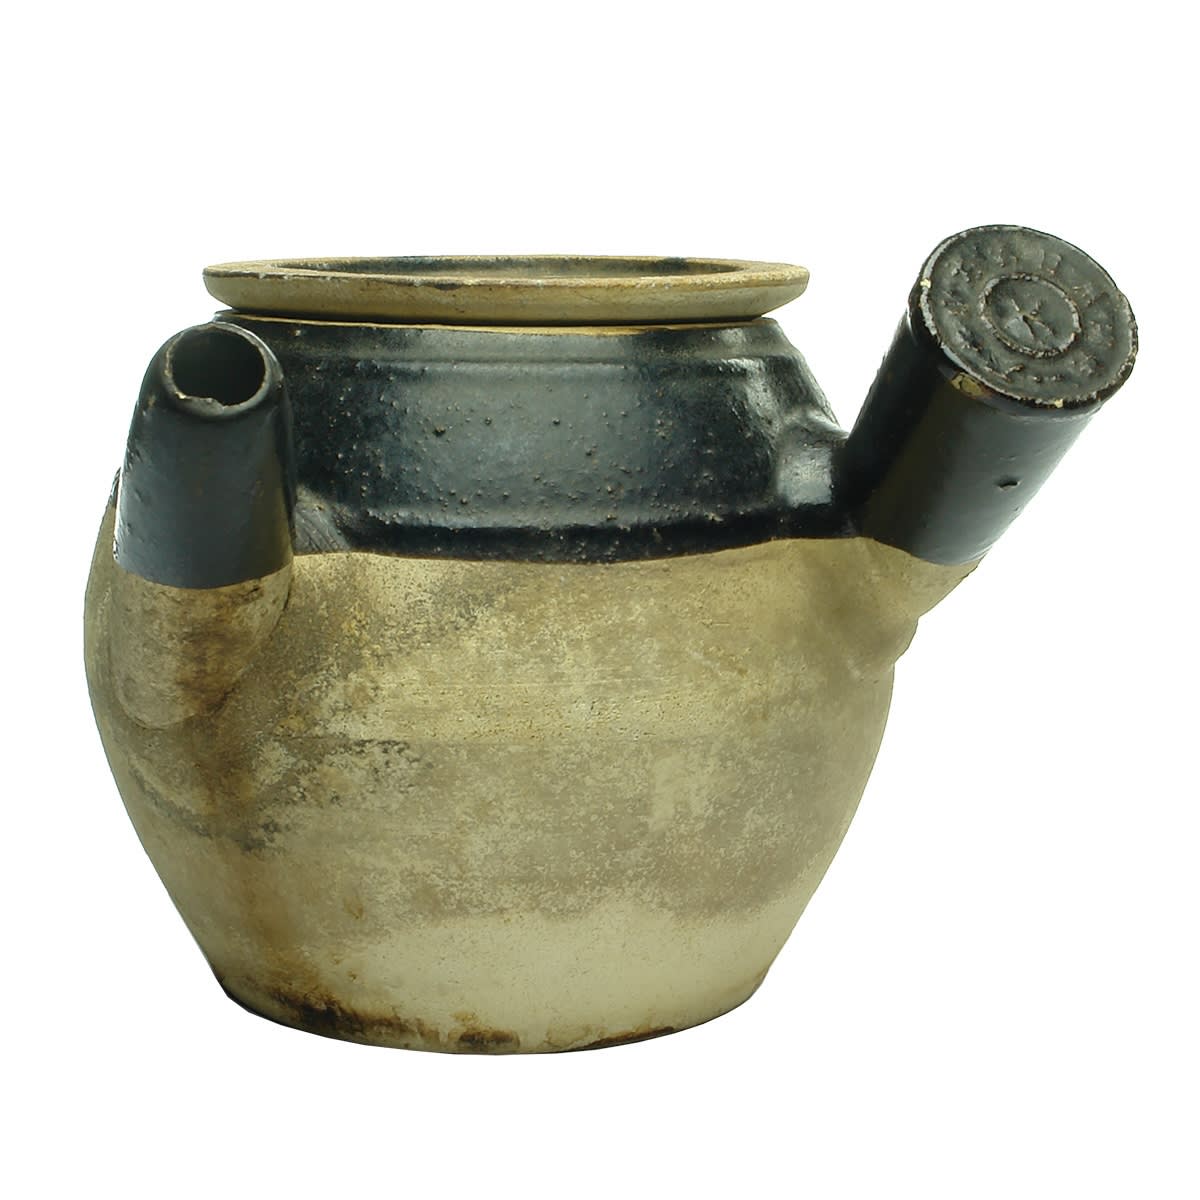 Chinese Cooking Pot. Ceramic. Handle & Breathing tube. Original lid.